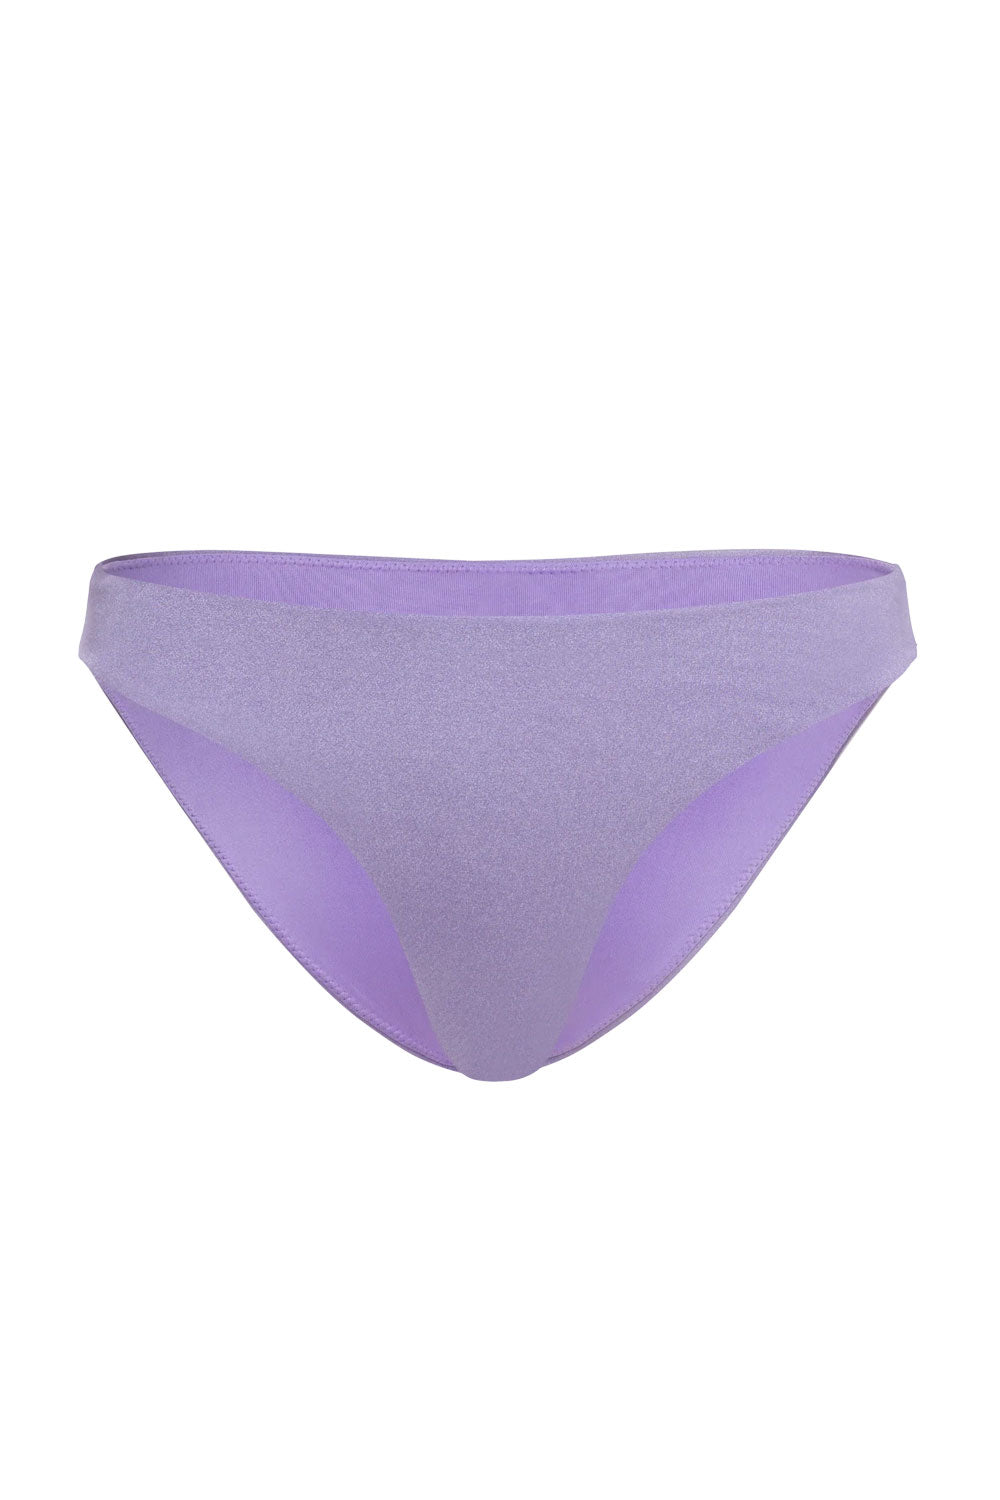 lavender full coverage bikini bottoms